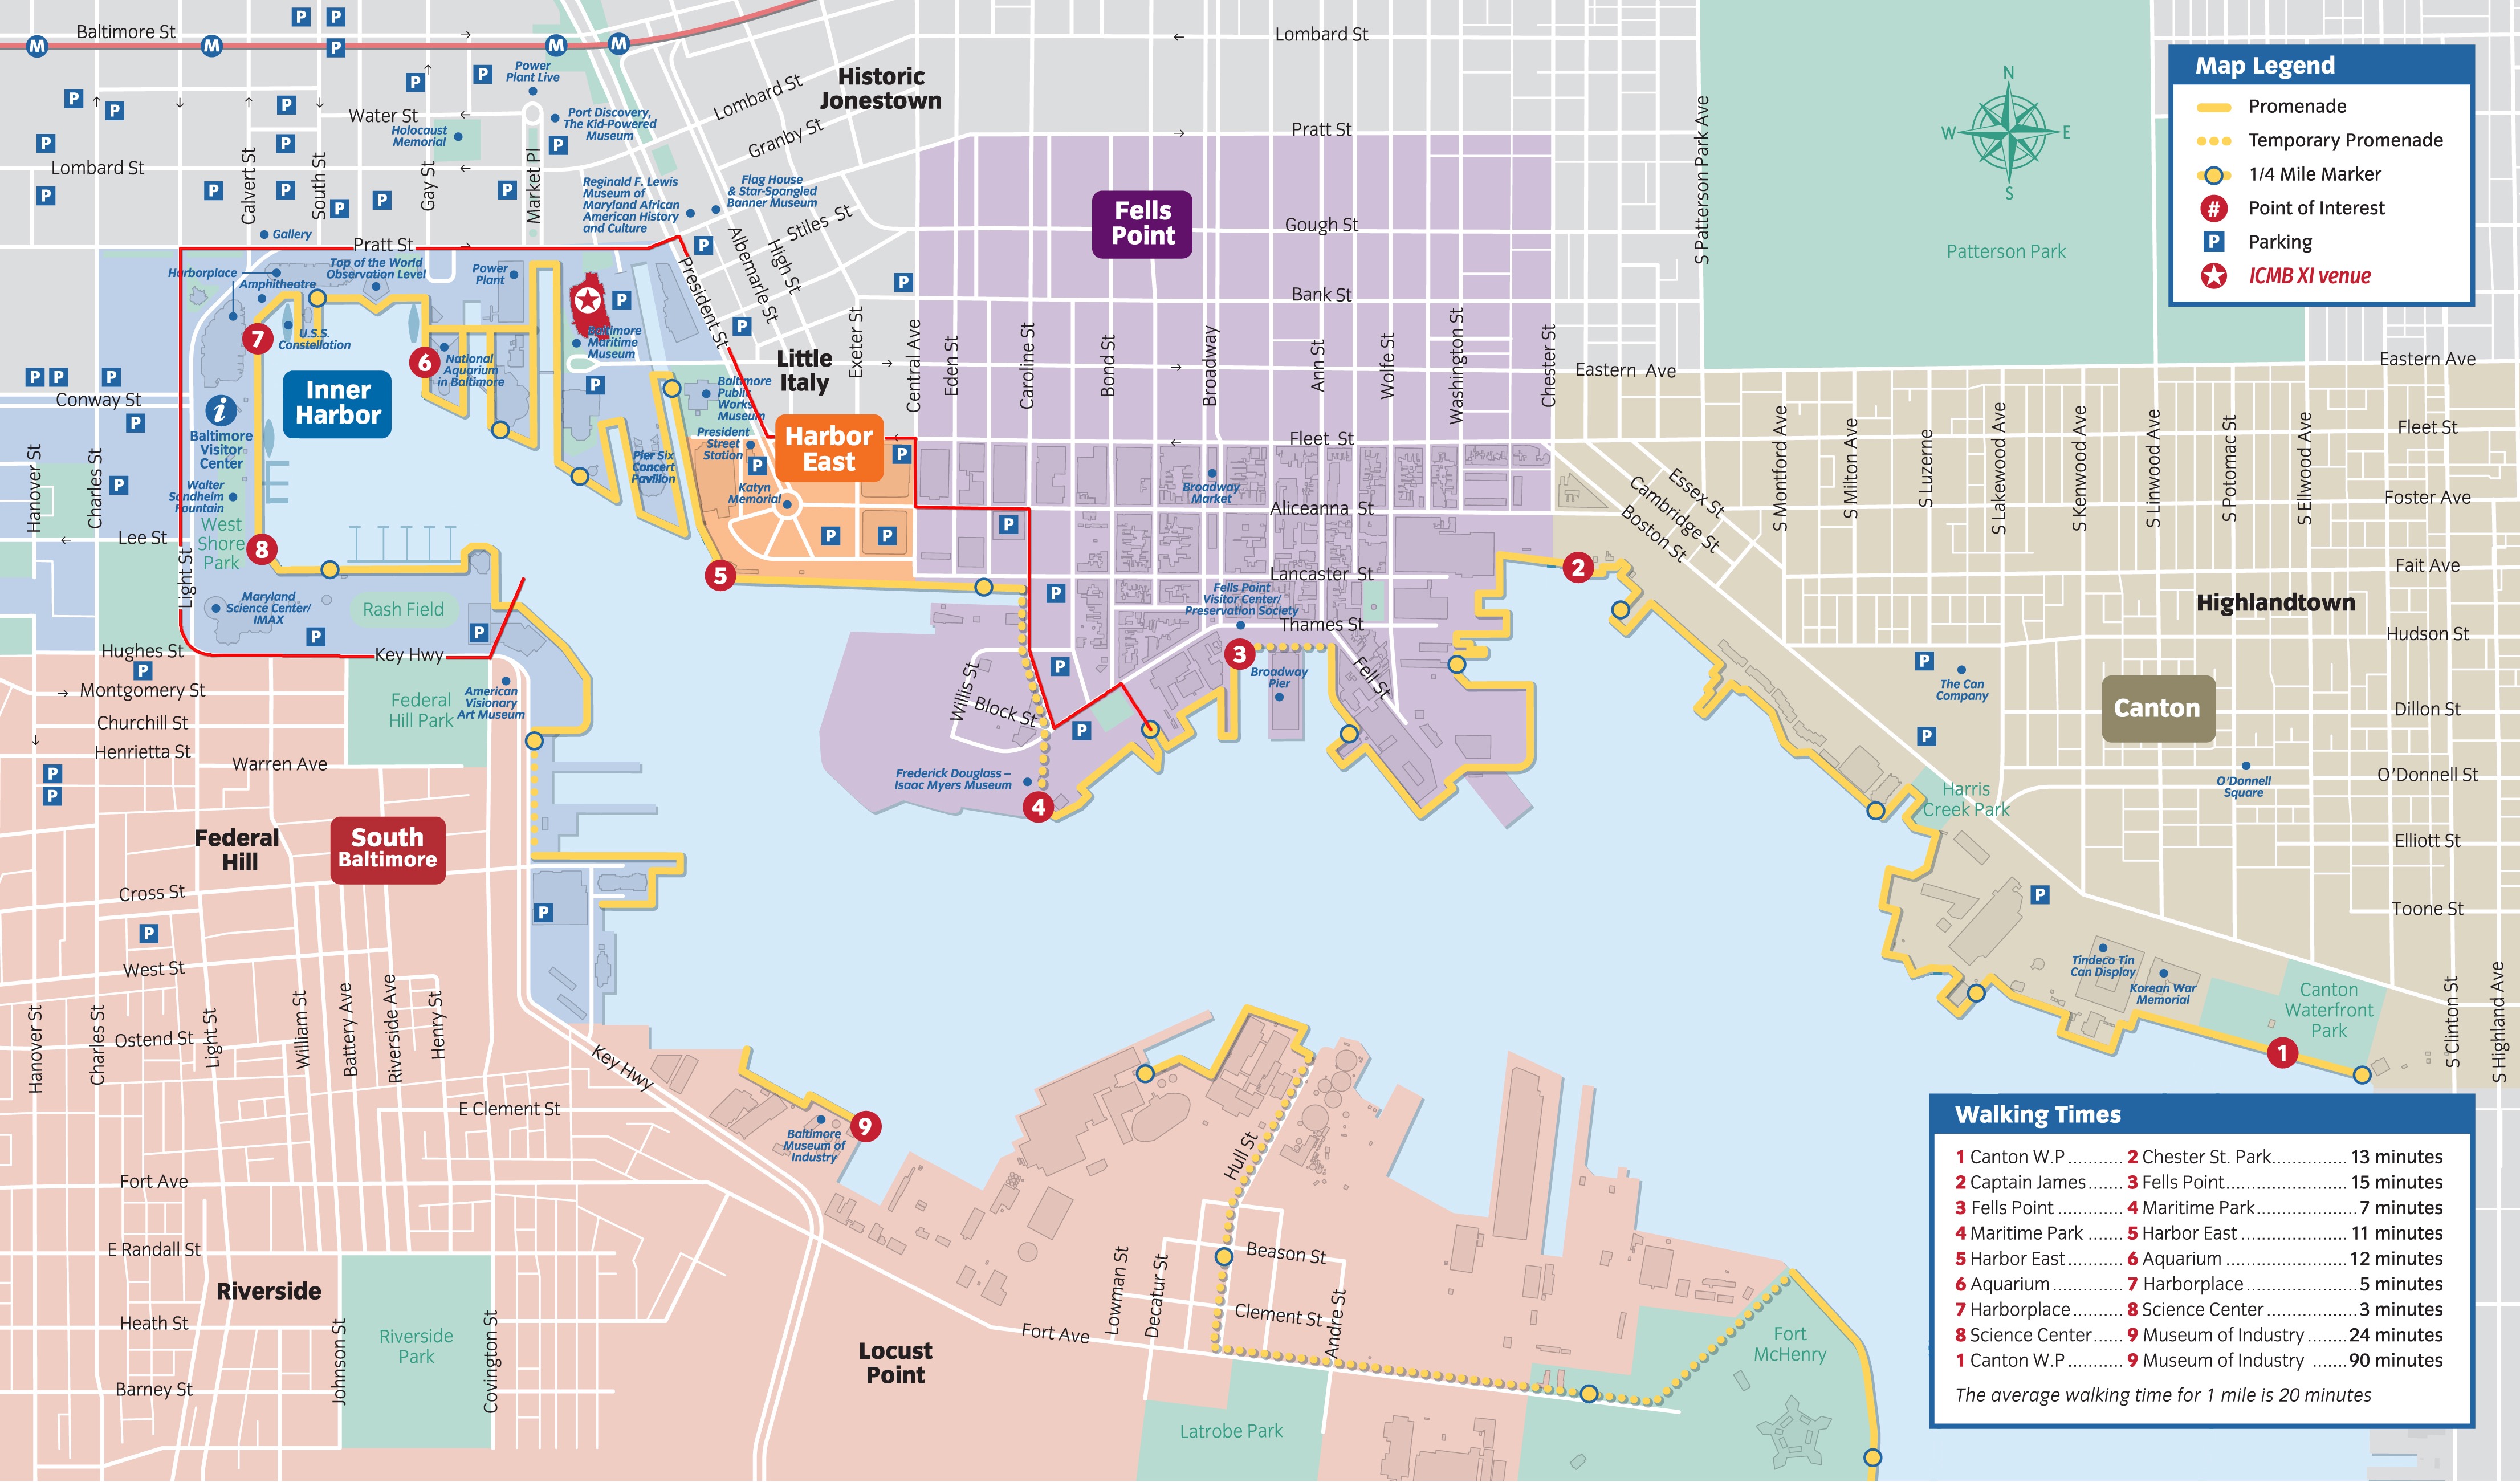 Map of Baltimore's waterfront neighborhoods